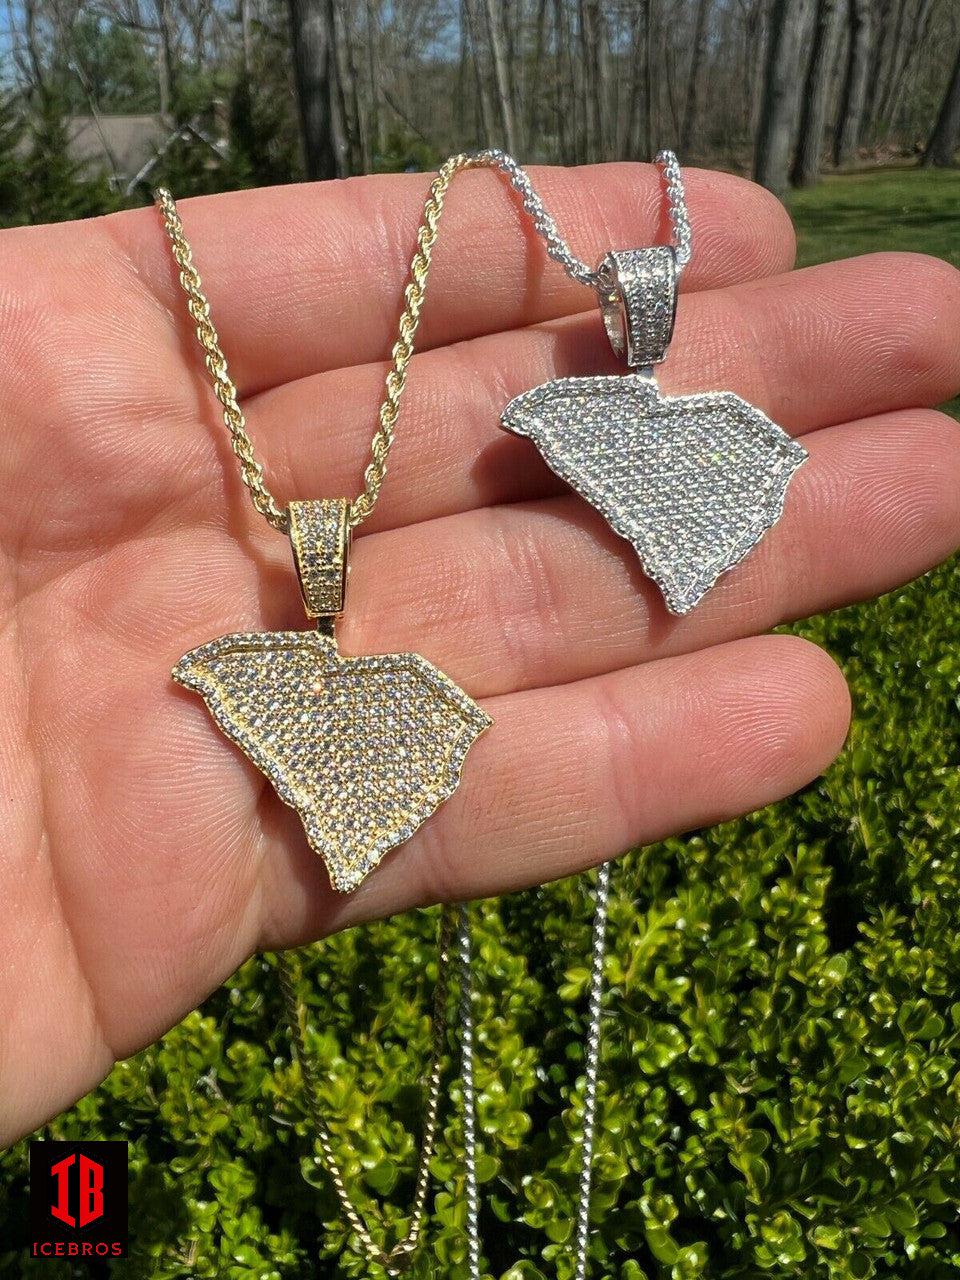 925 Silver Hip Hop South Carolina Flag Shape Pendant Iced Diamond Necklace Gold